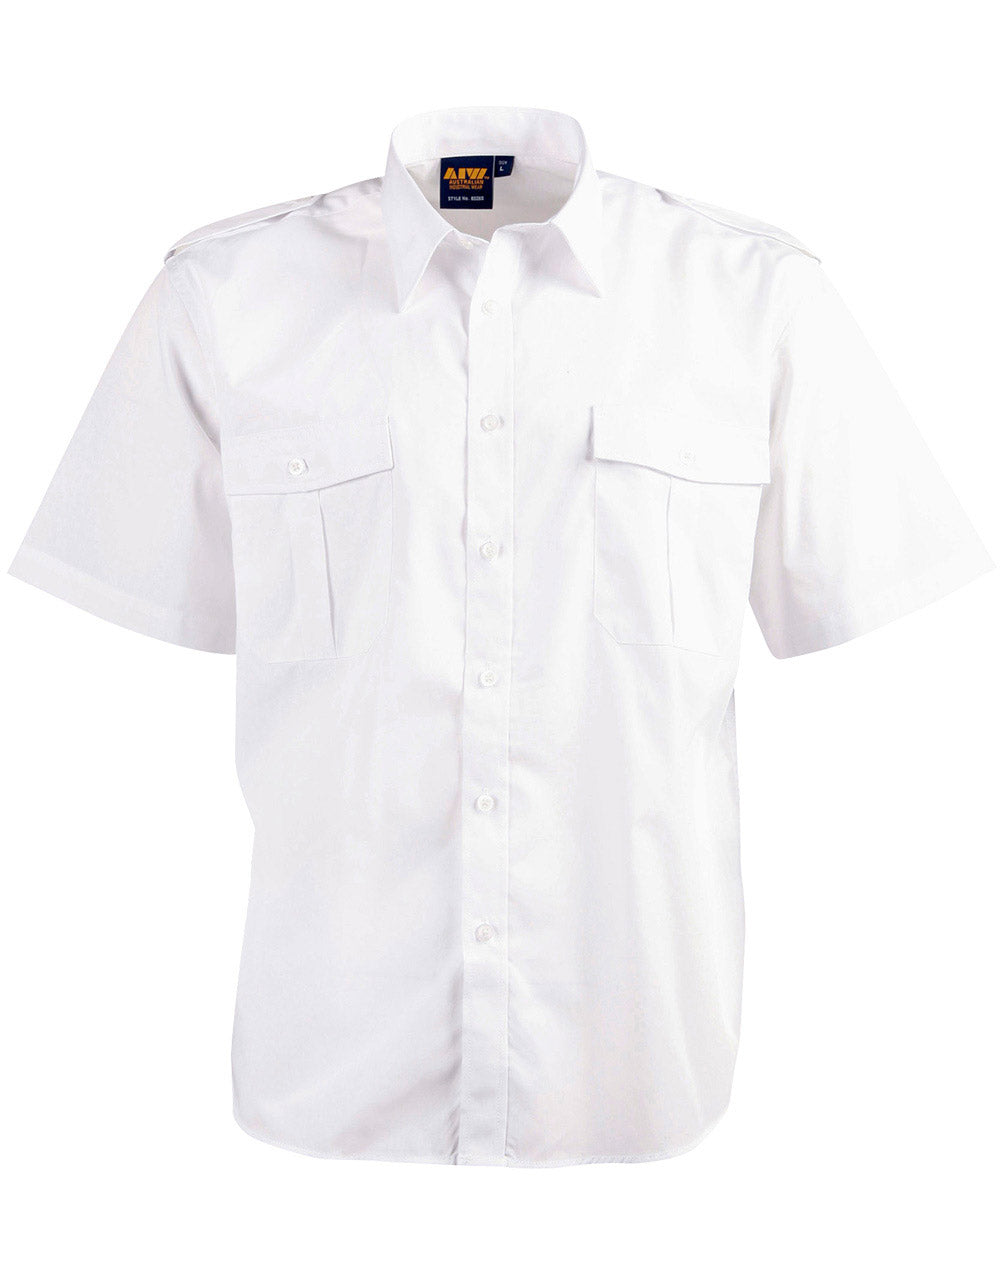 white-shirts